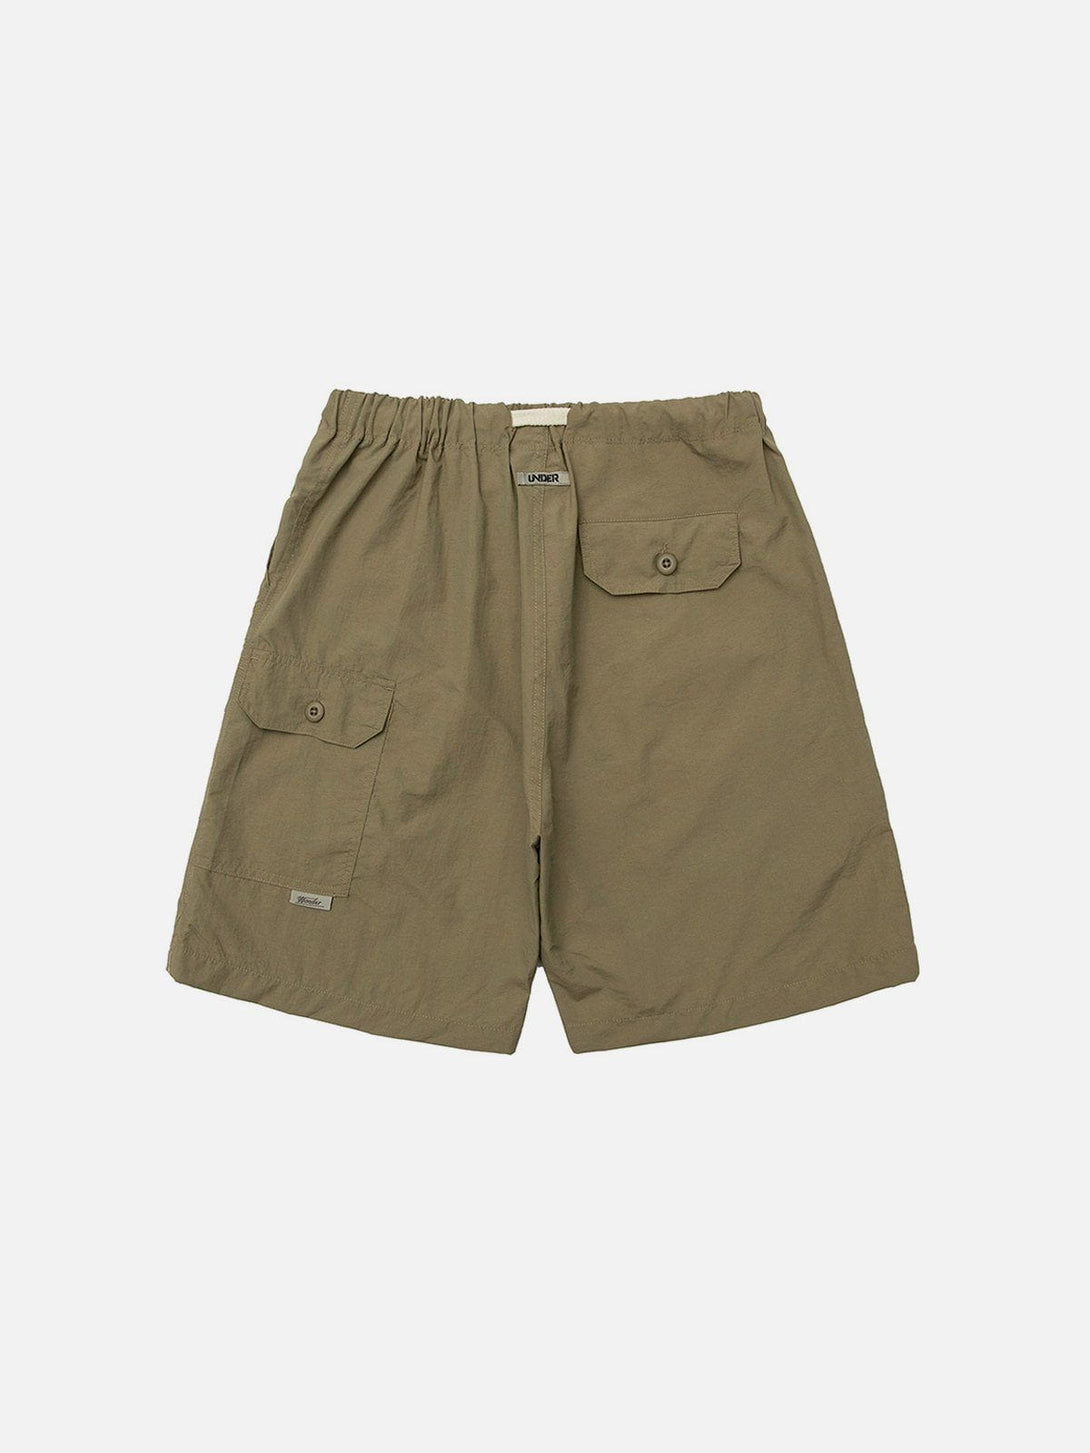 Levefly - Button Pocket Shorts - Streetwear Fashion - levefly.com